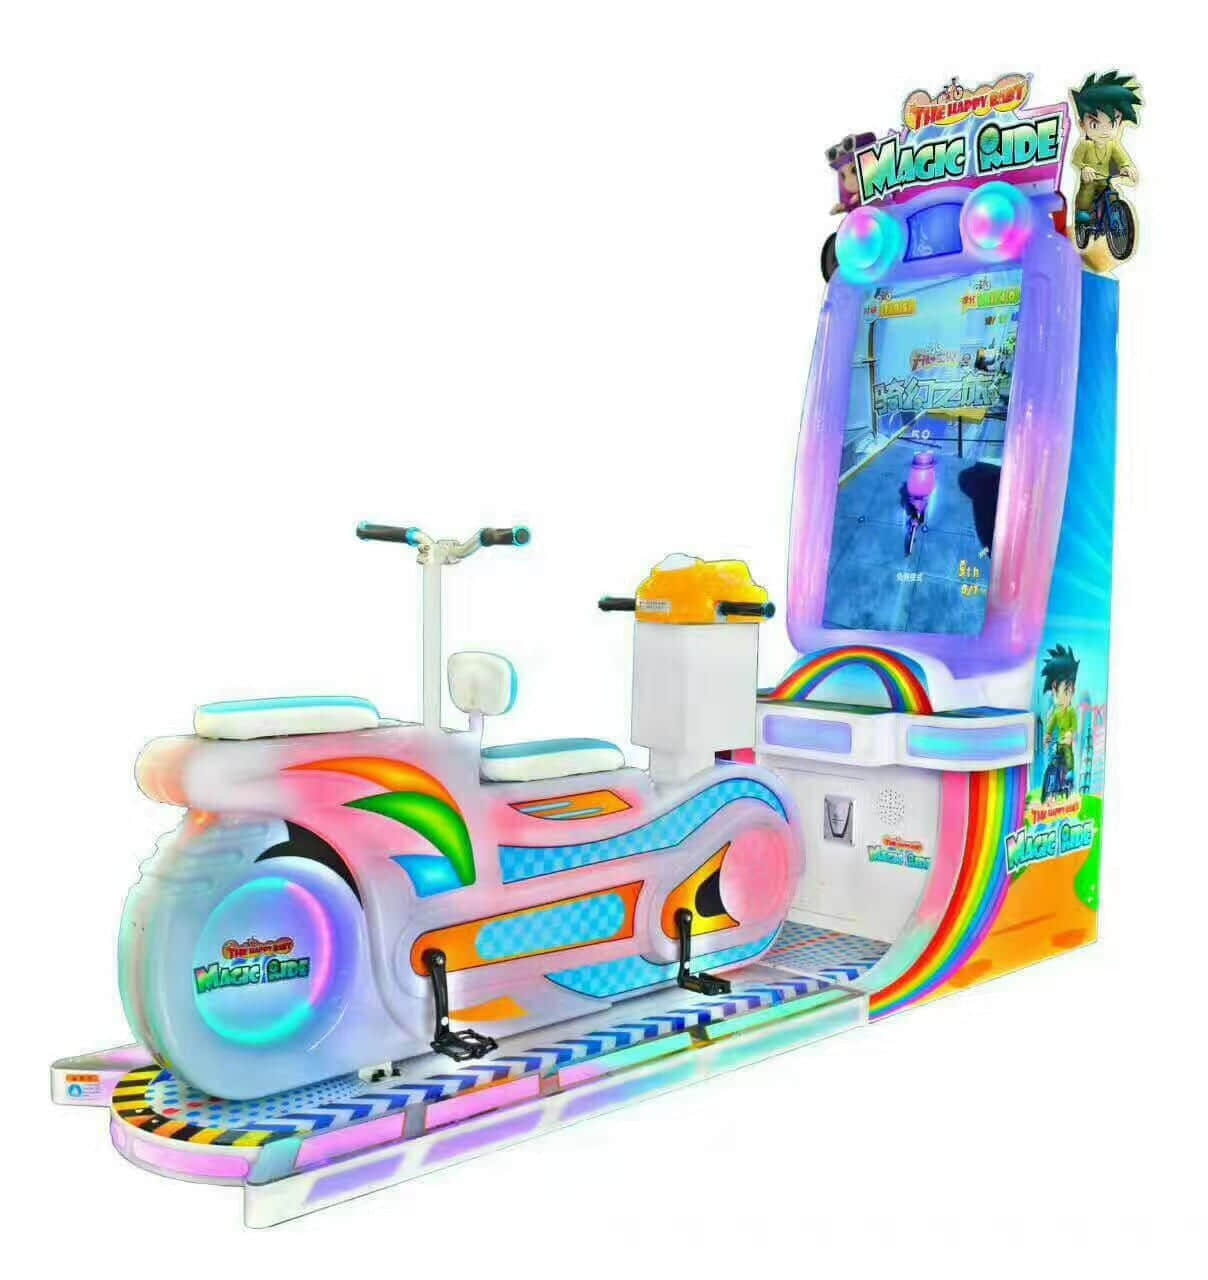 arcade game machine